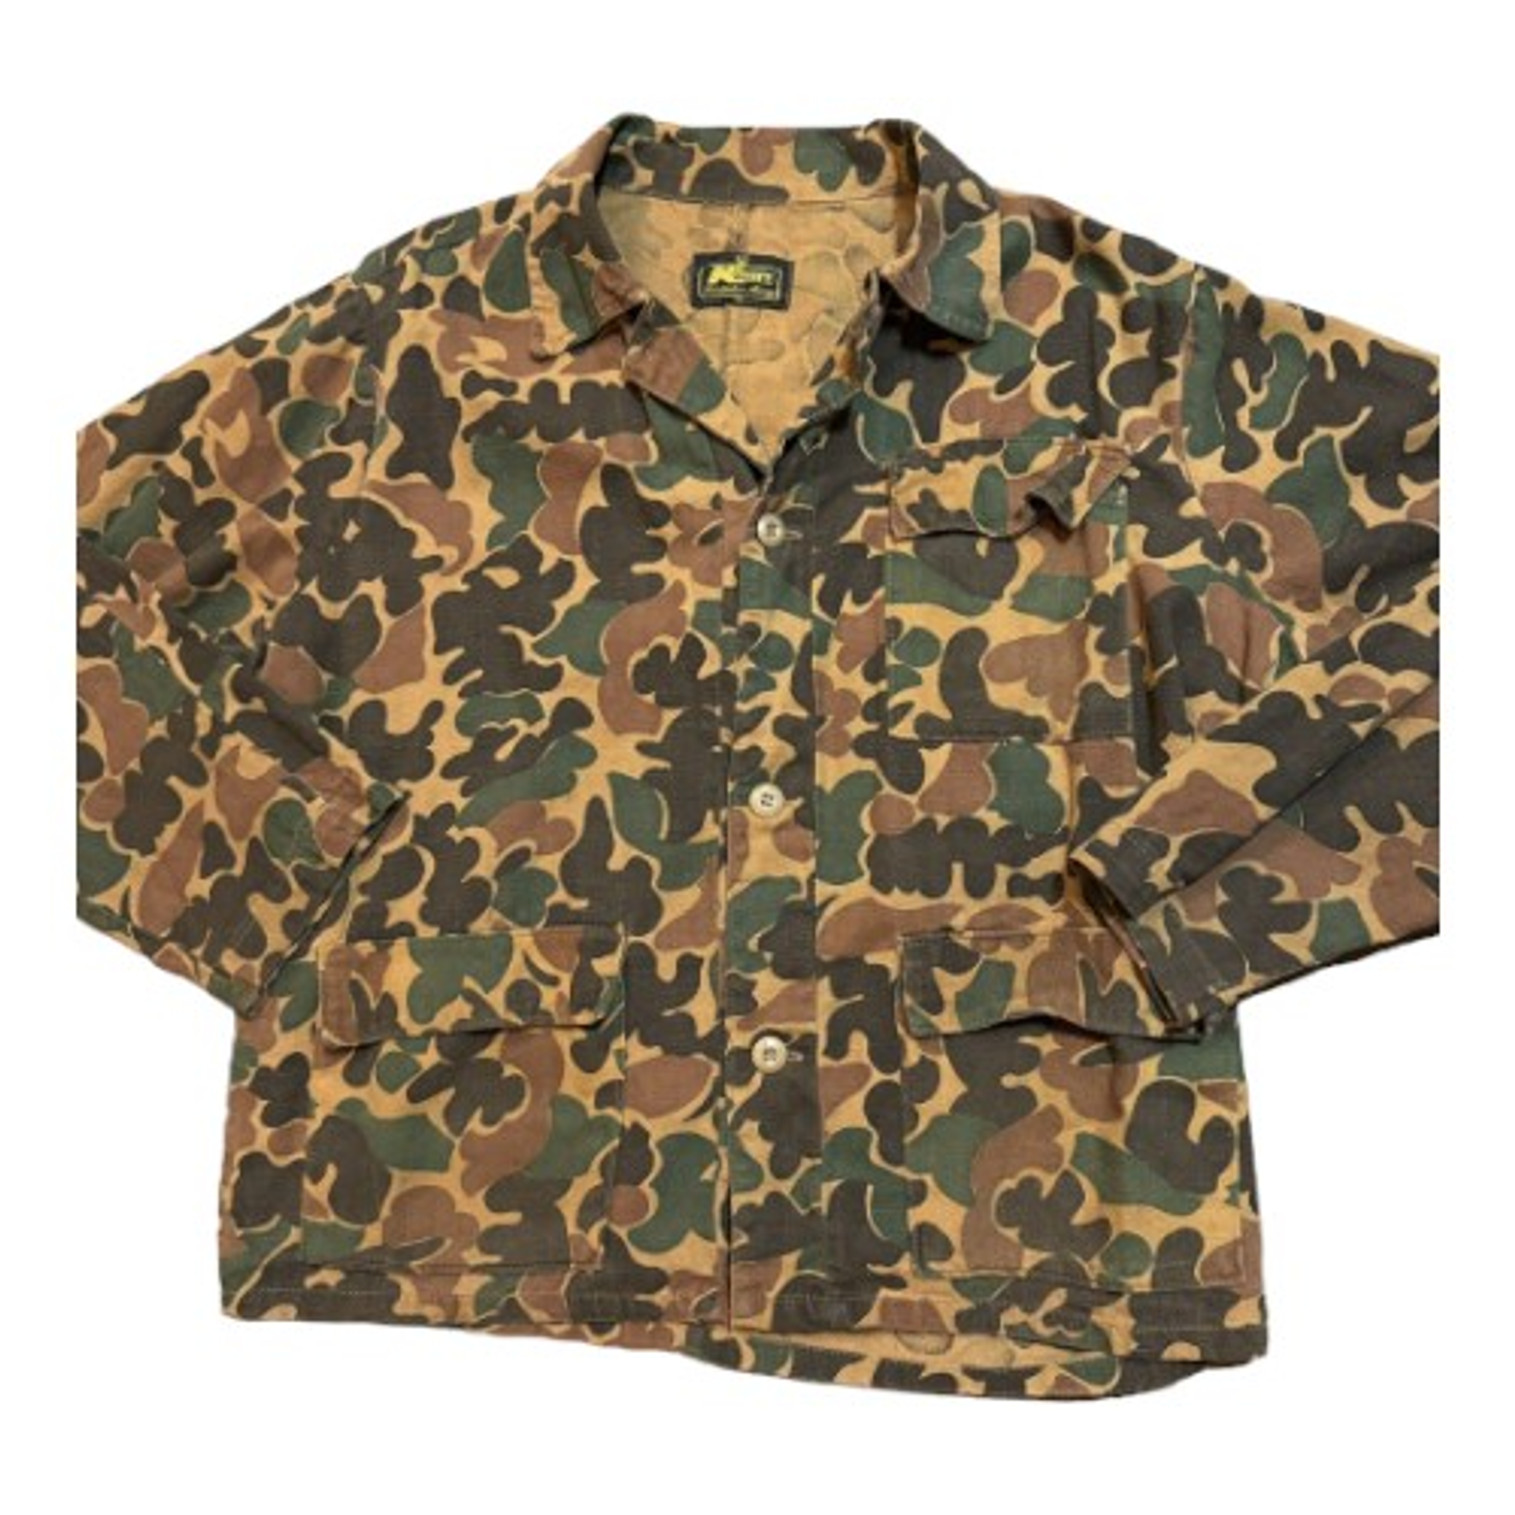 Vintage Kmart Duck Hunting Camouflage Shirt - Size Large